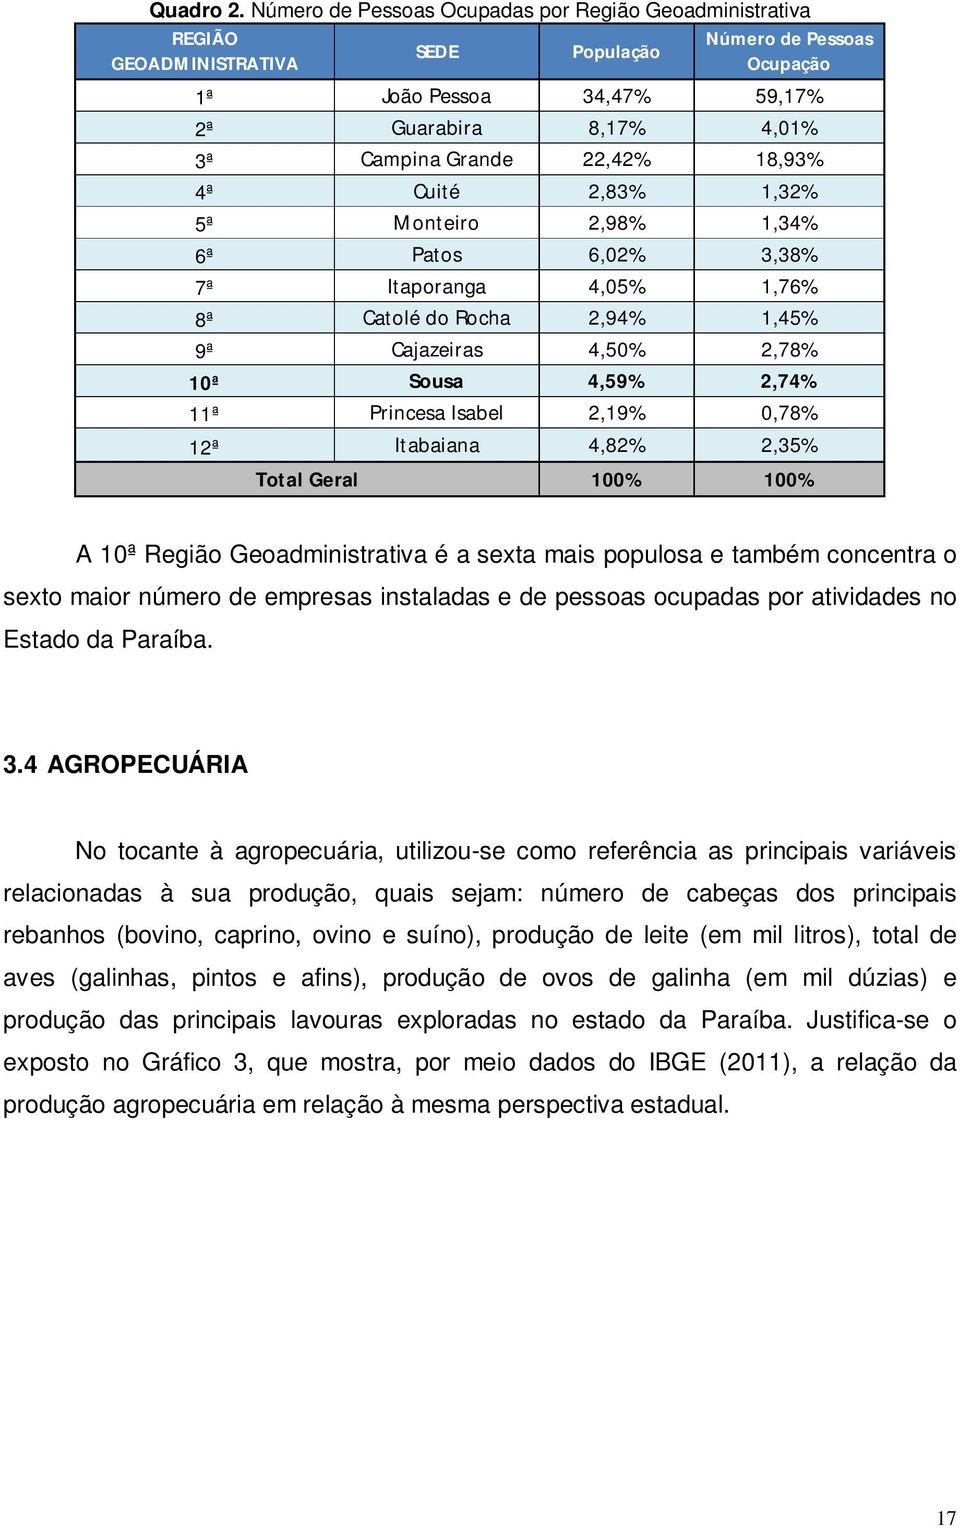 22,42% 18,93% 4ª Cuité 2,83% 1,32% 5ª Monteiro 2,98% 1,34% 6ª Patos 6,02% 3,38% 7ª Itaporanga 4,05% 1,76% 8ª Catolé do Rocha 2,94% 1,45% 9ª Cajazeiras 4,50% 2,78% 10ª Sousa 4,59% 2,74% 11ª Princesa